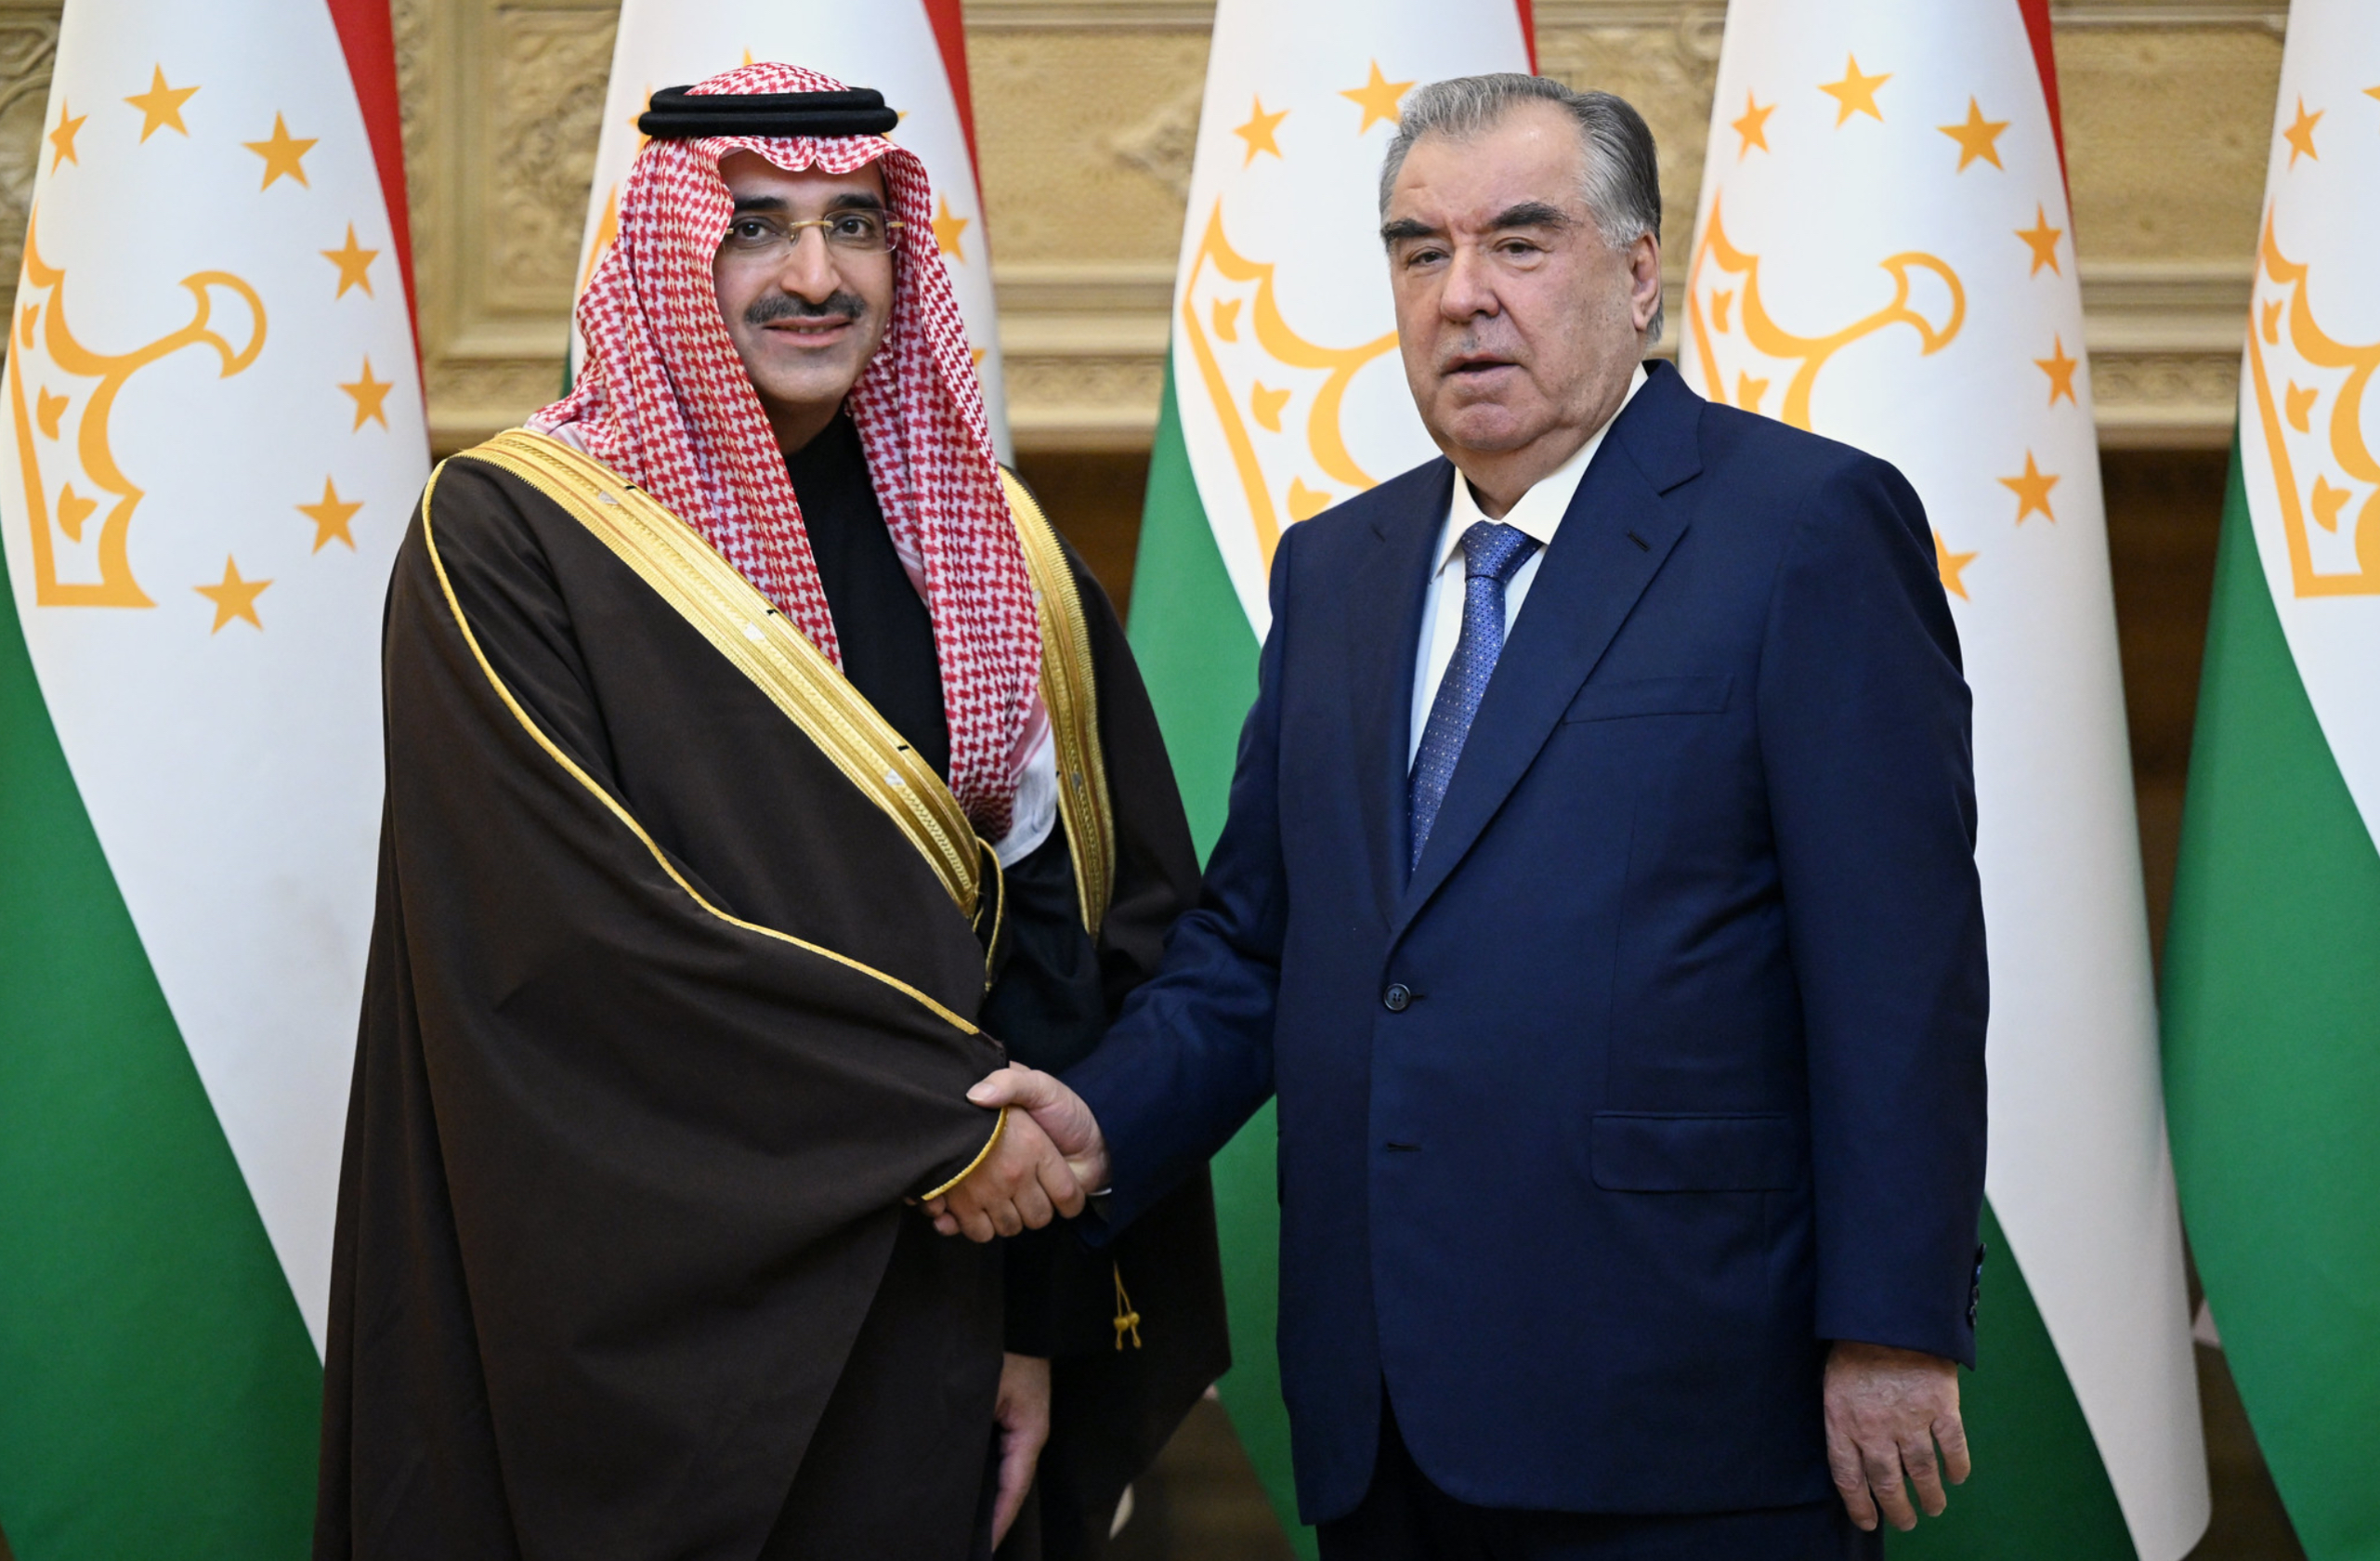 President Emomali Rahmon of Tajikistan with Sultan Abdulrahman Al-Marshad, the Chief Executive Officer of the Saudi Fund for Development,